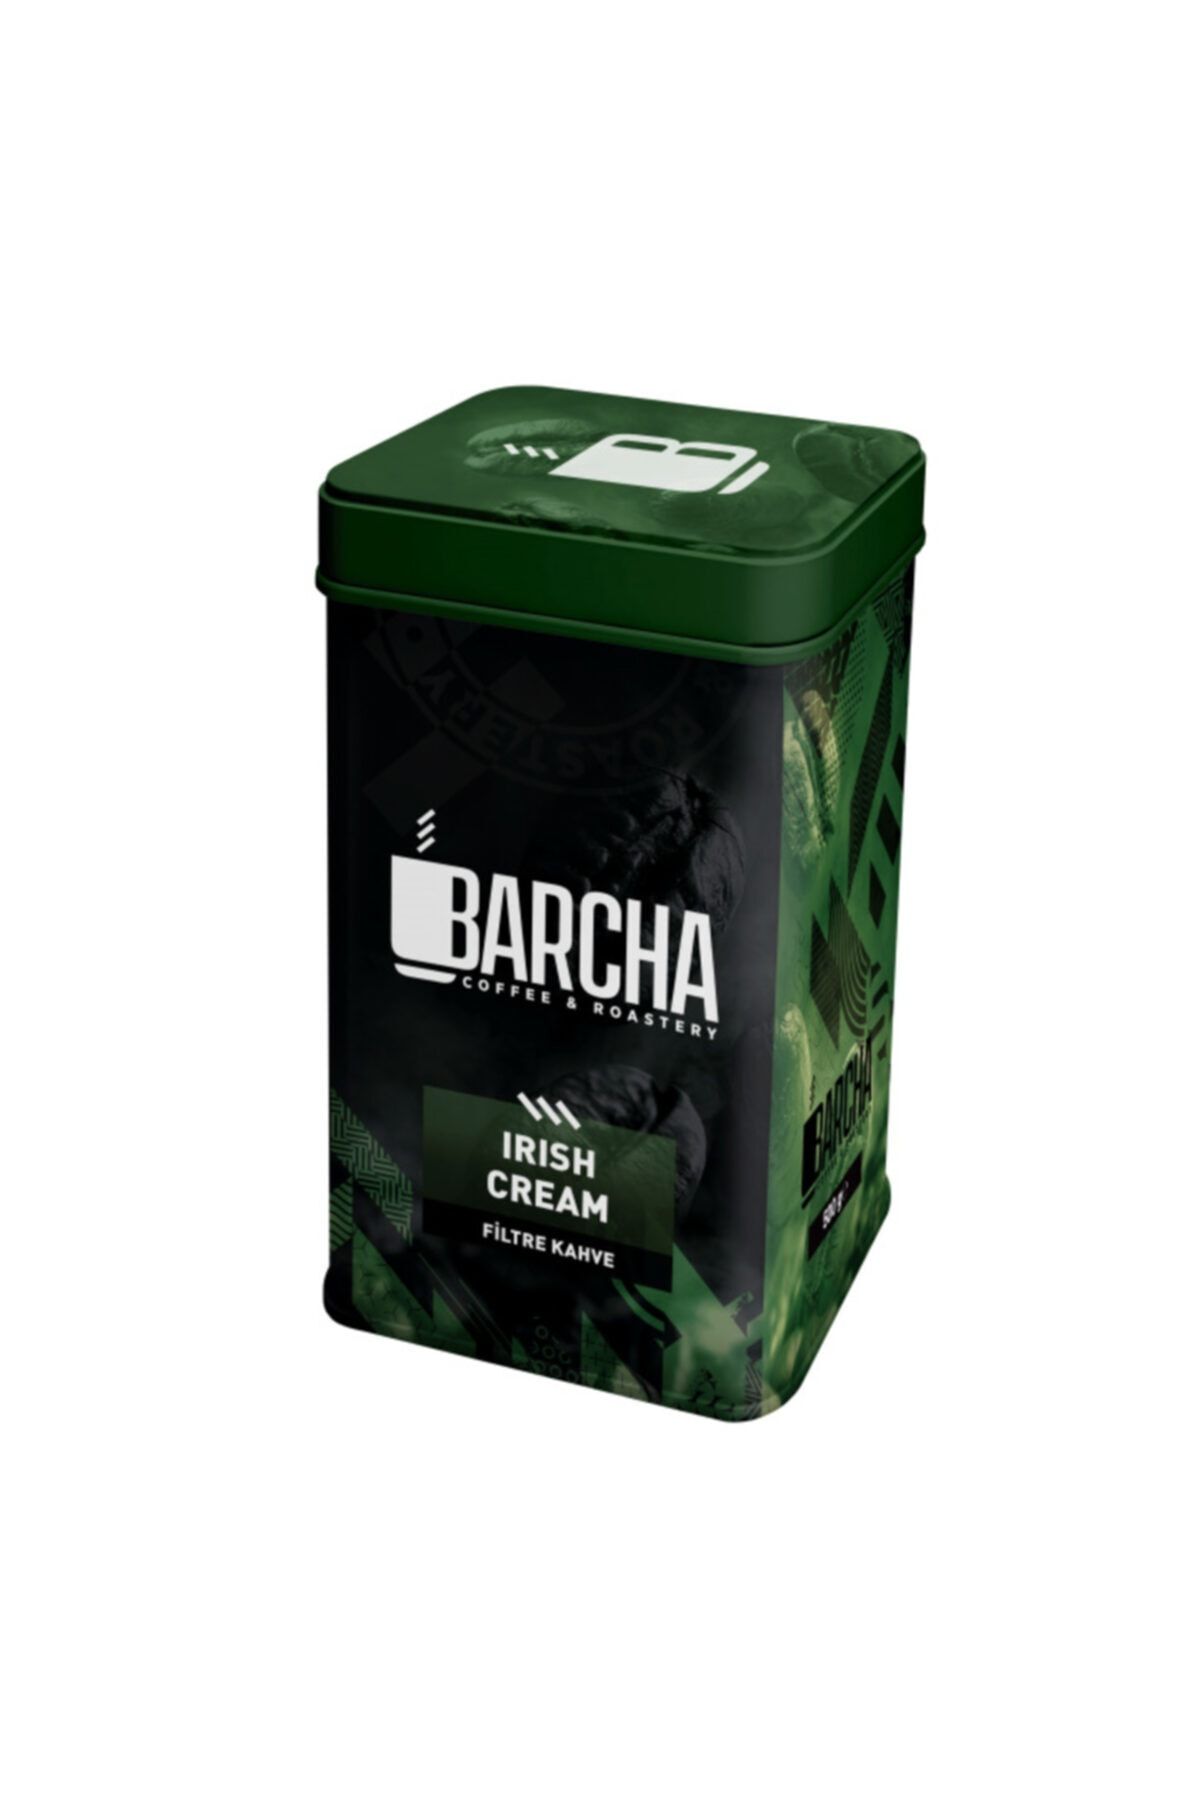 Barcha Coffee Barcha Filtre Kahve Irısh Cream Aromalı 500 gr.